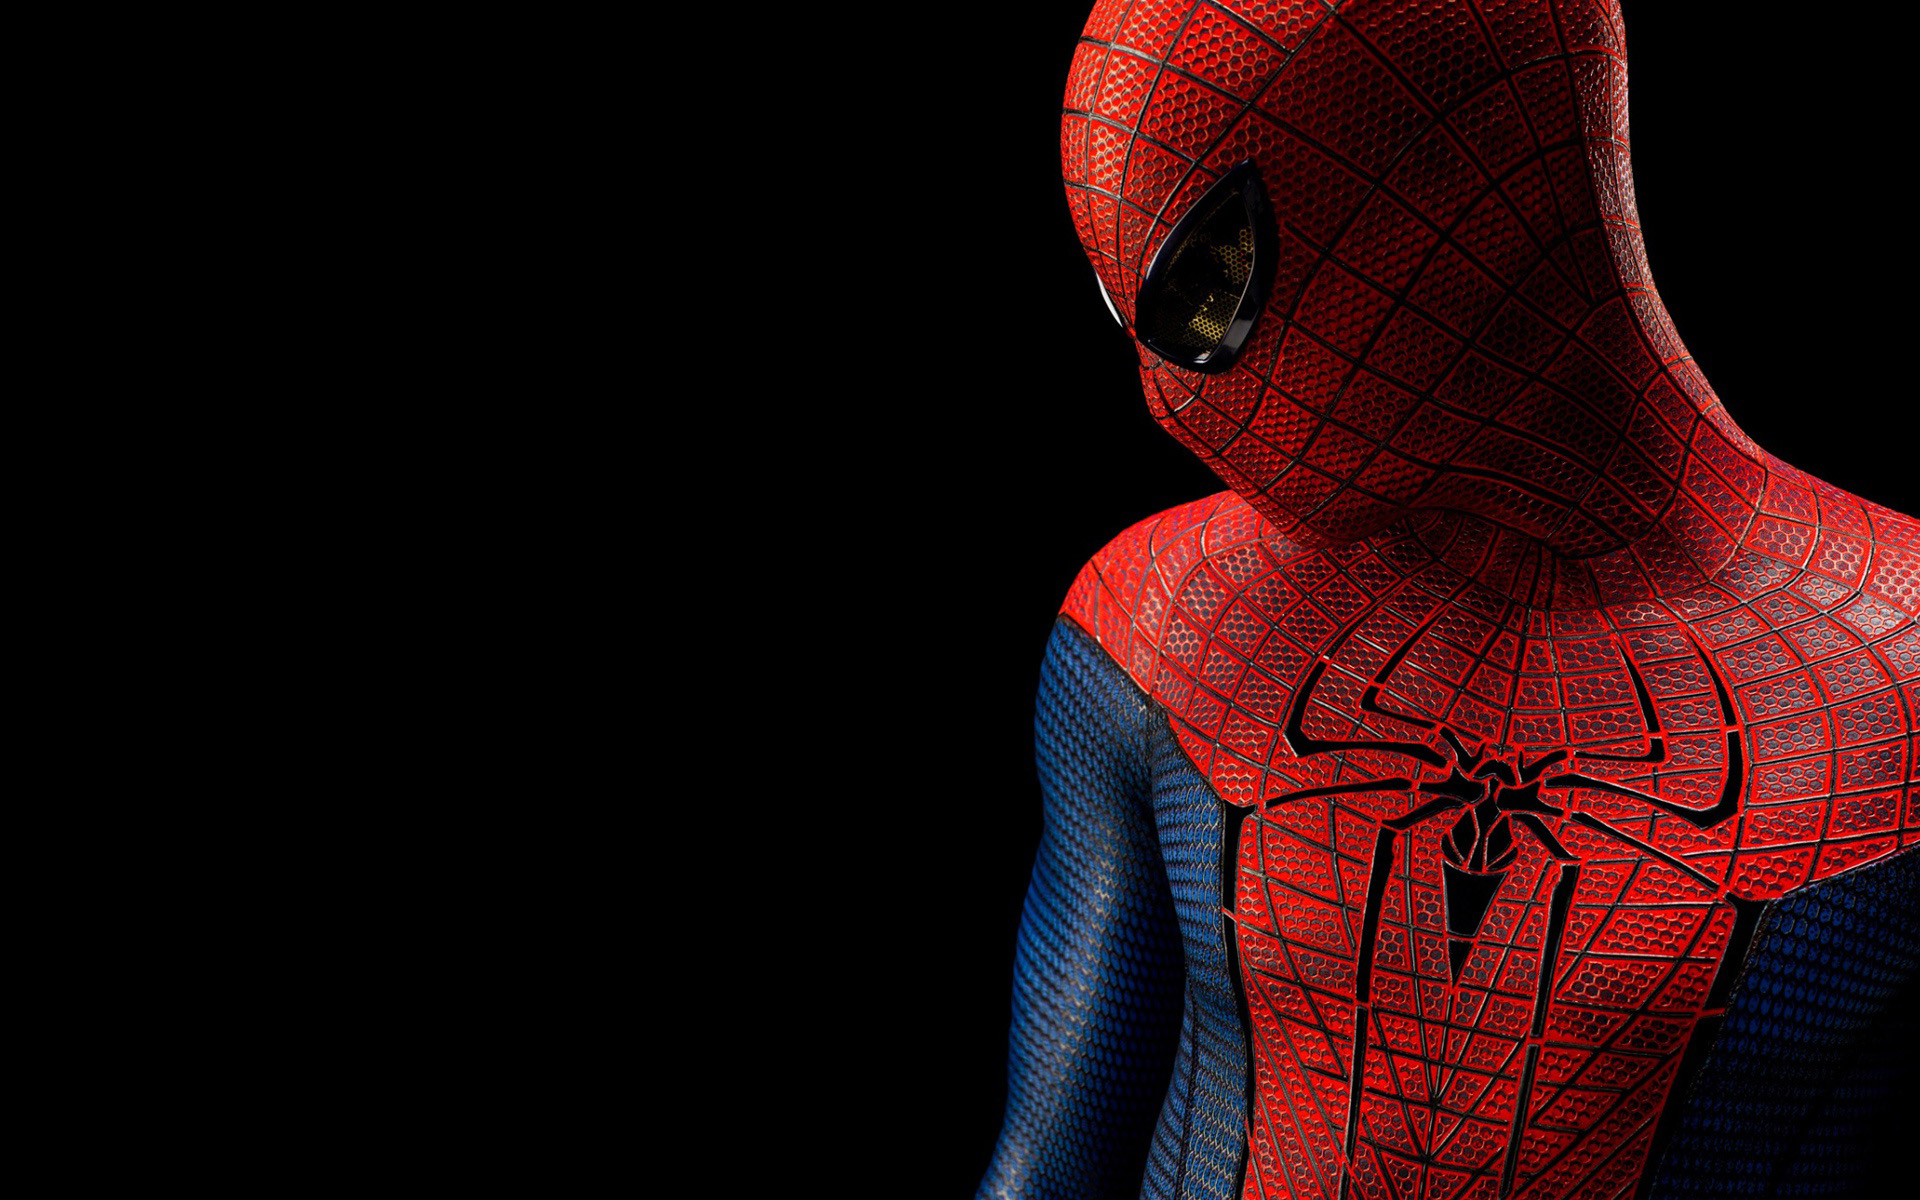 Amazing Spiderman spiderman pictures